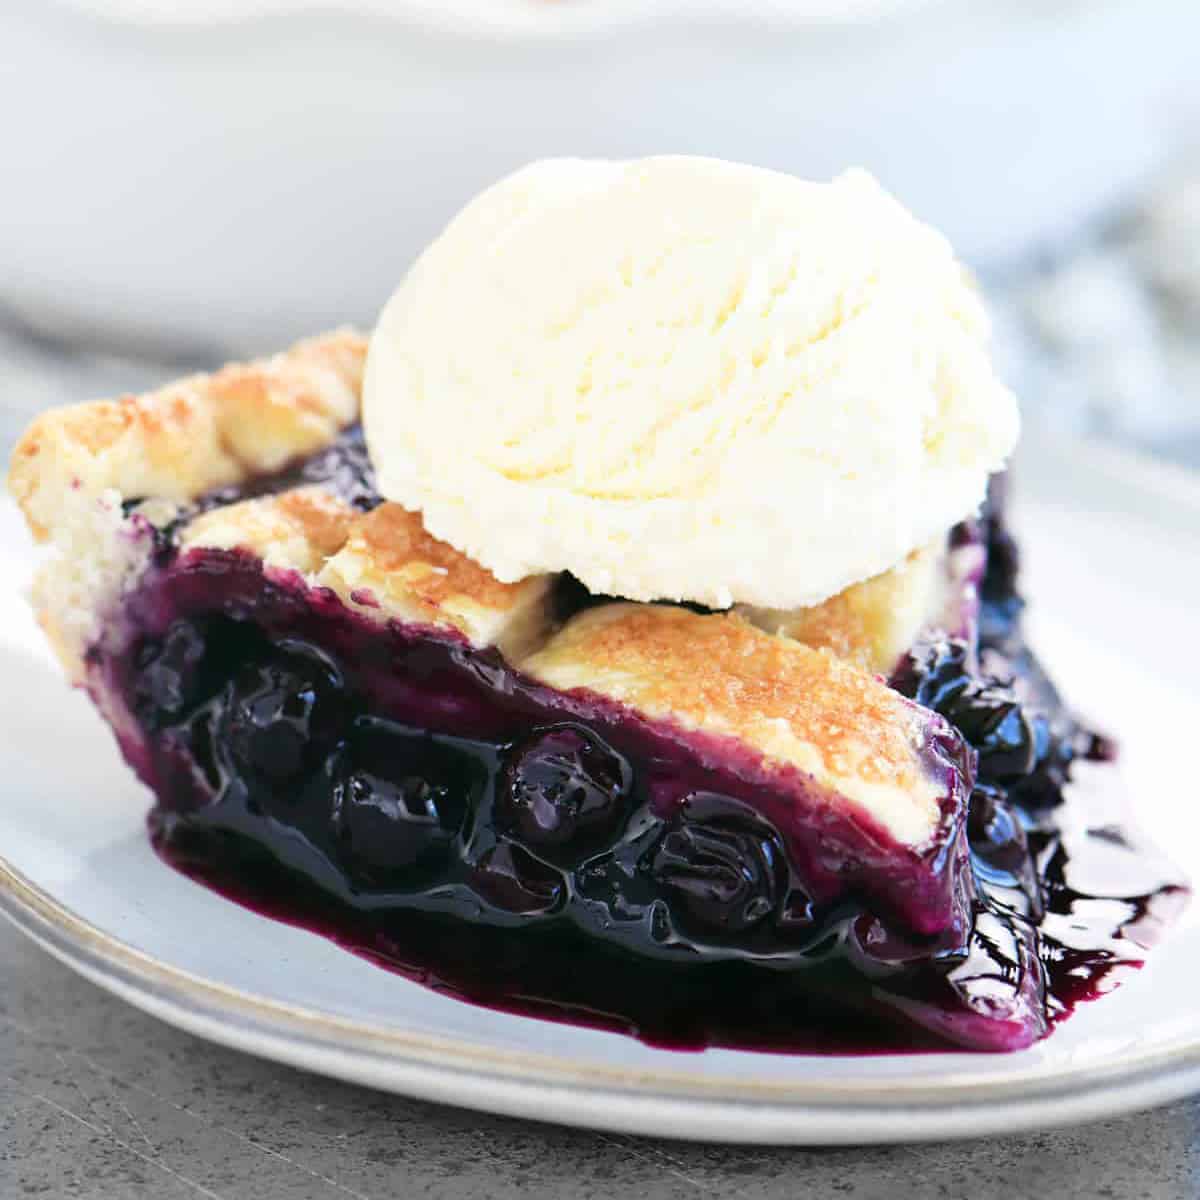 slice of blueberry pie with ice cream on top.